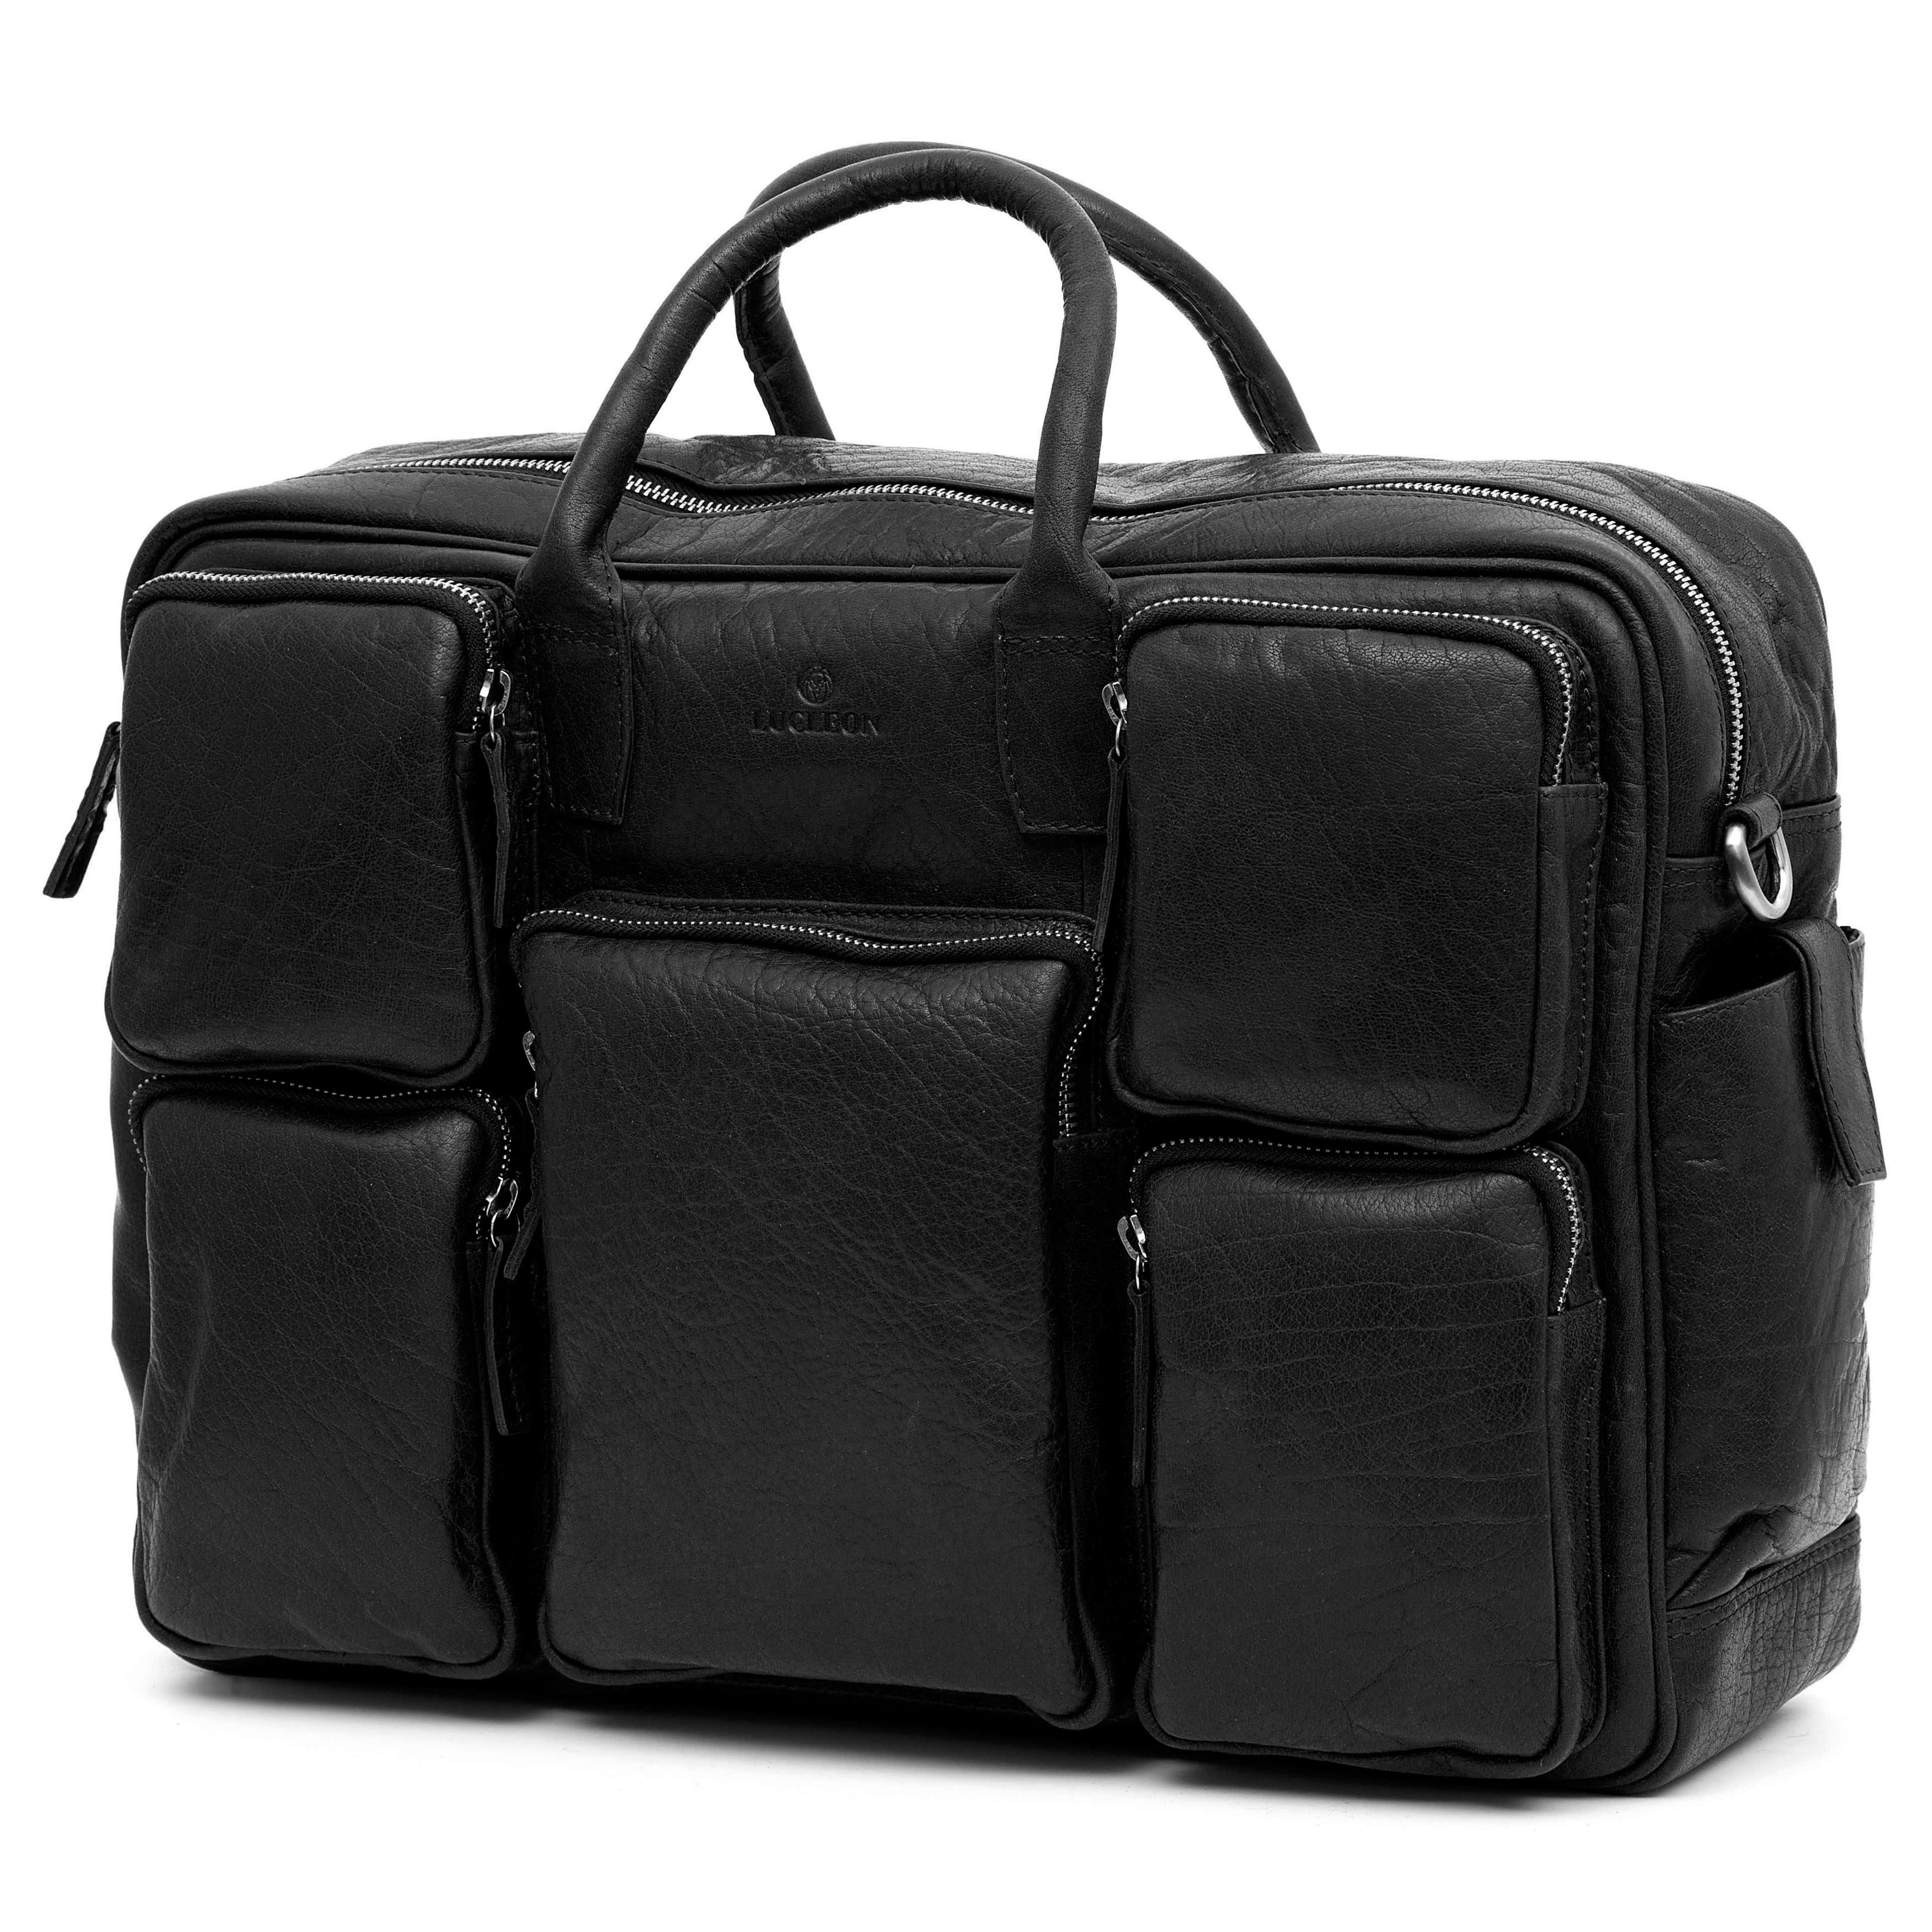 Montreal Safari Black Leather Travel Bag